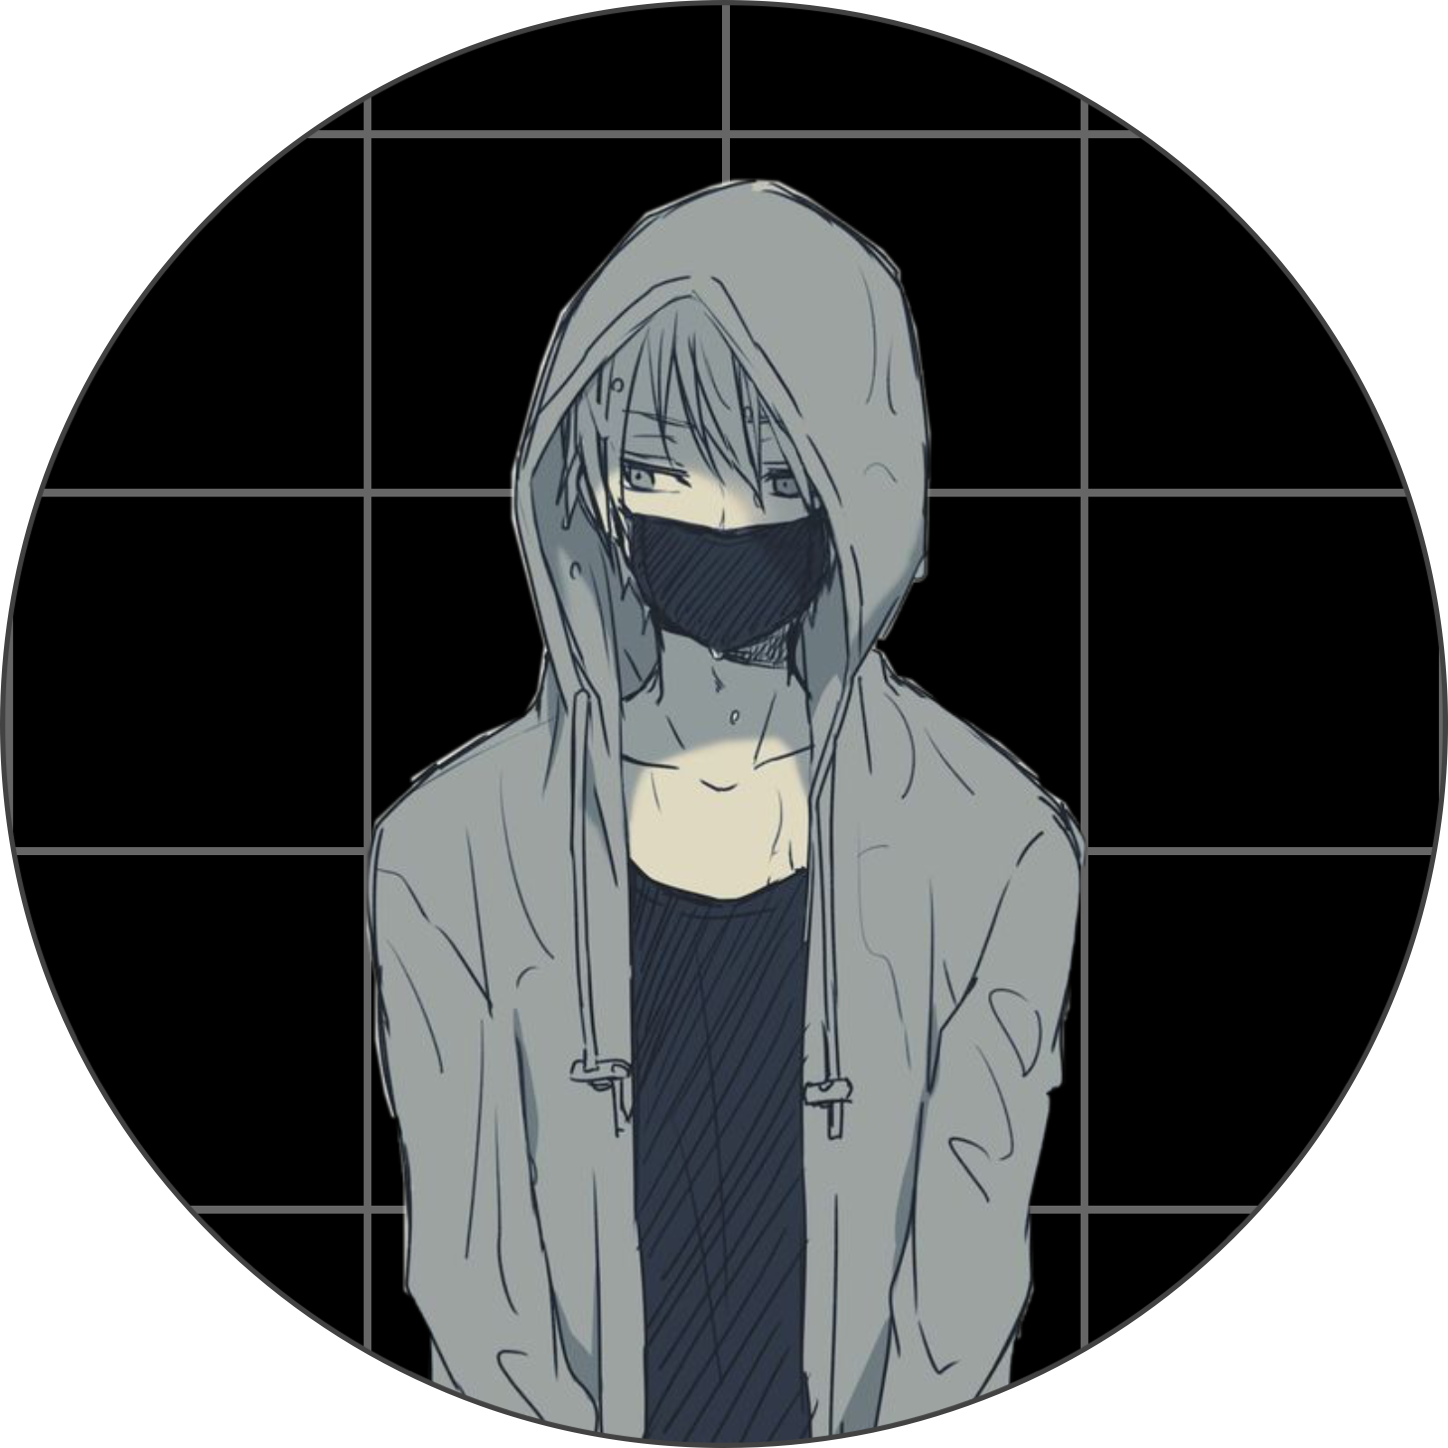 Depressed Anime Boy Drawing - Download Anime x265 Batch ...